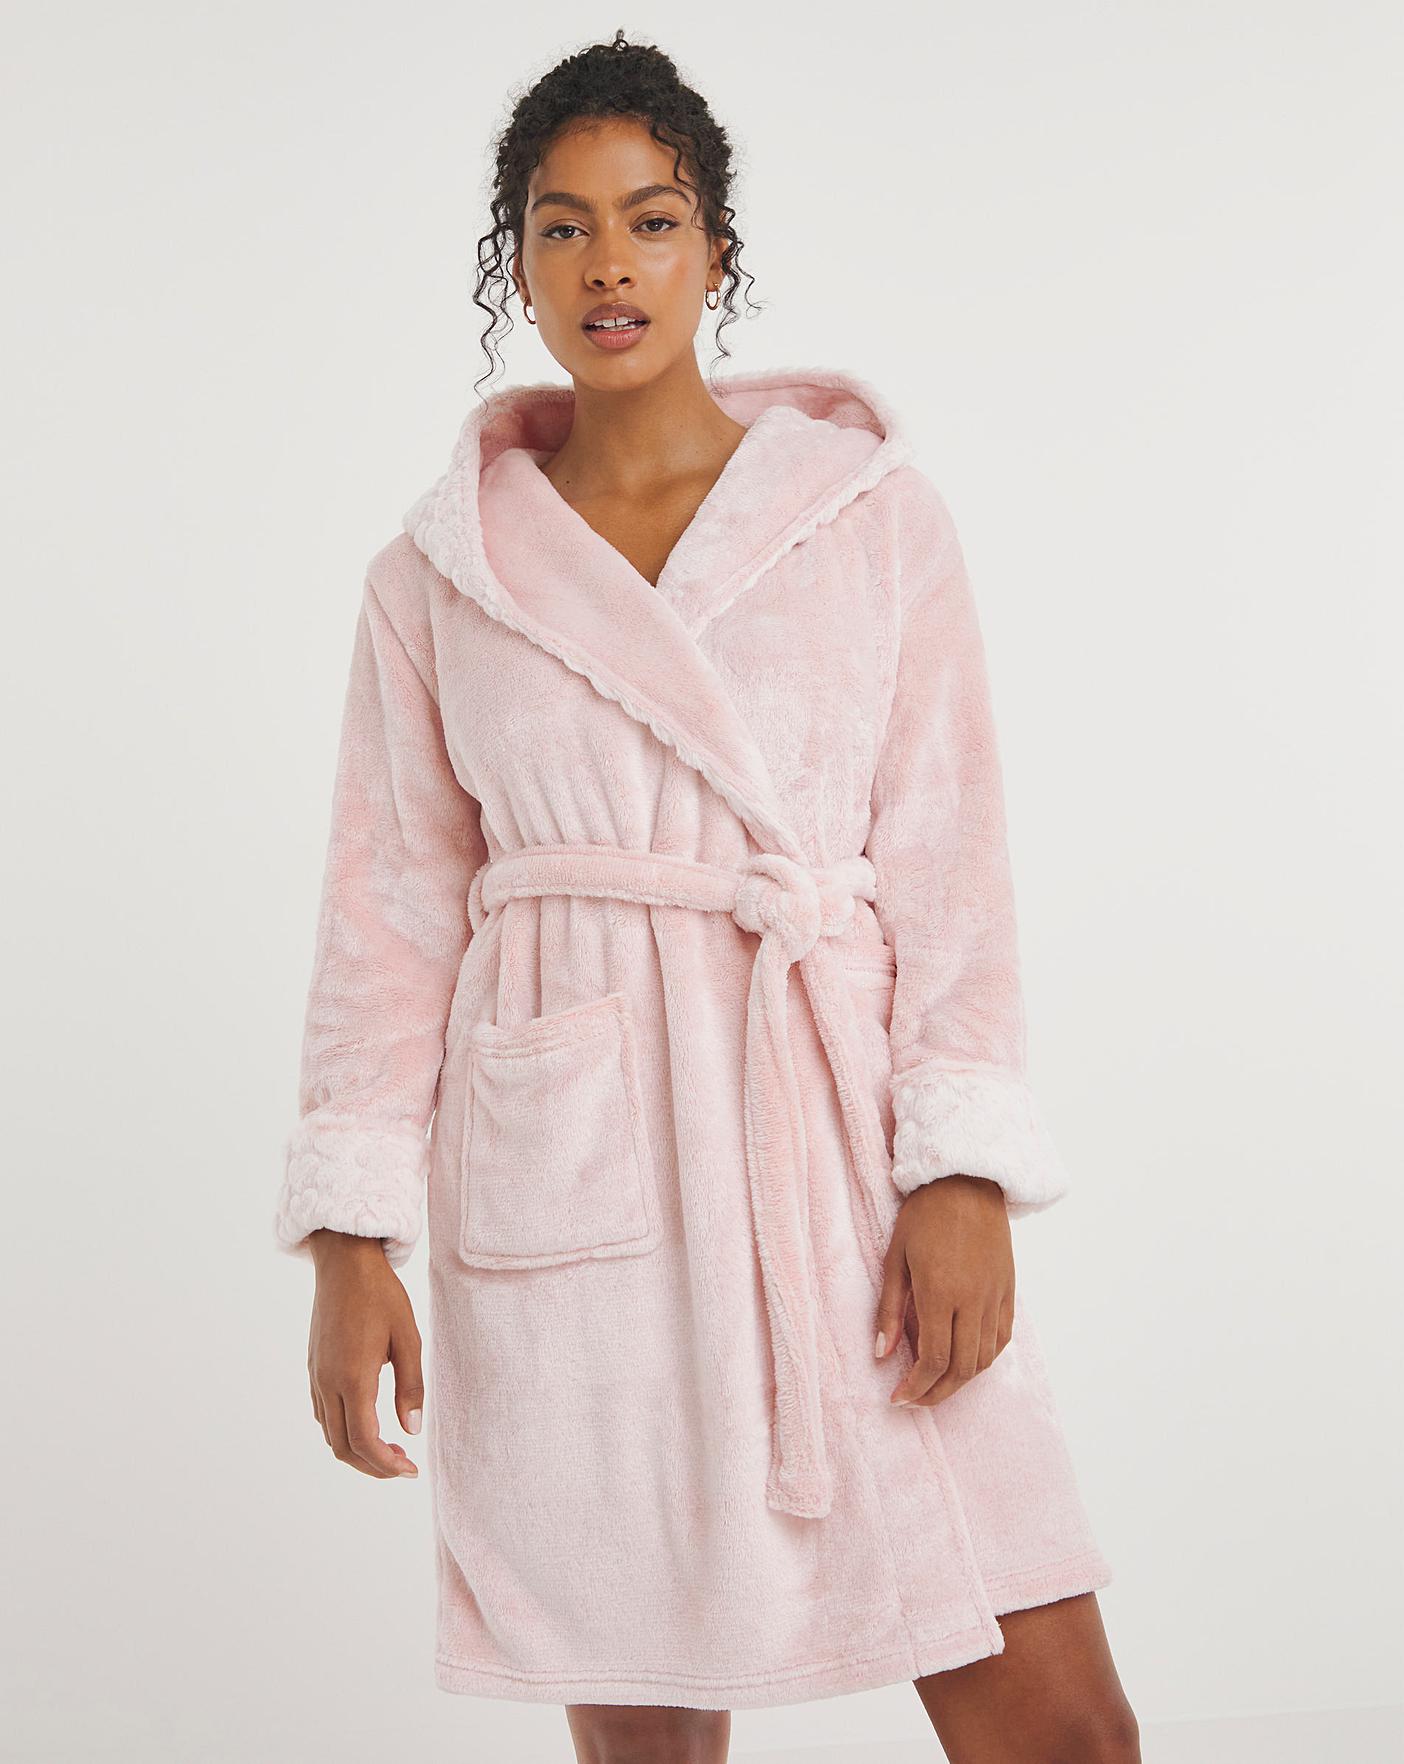 Super Soft Blush Pink Plush Hooded Women's Robe